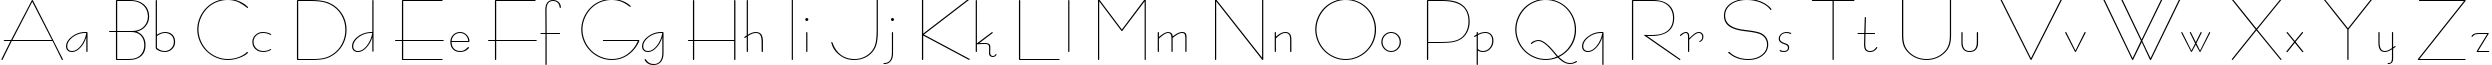 Пример написания английского алфавита шрифтом BernhardFashion BT